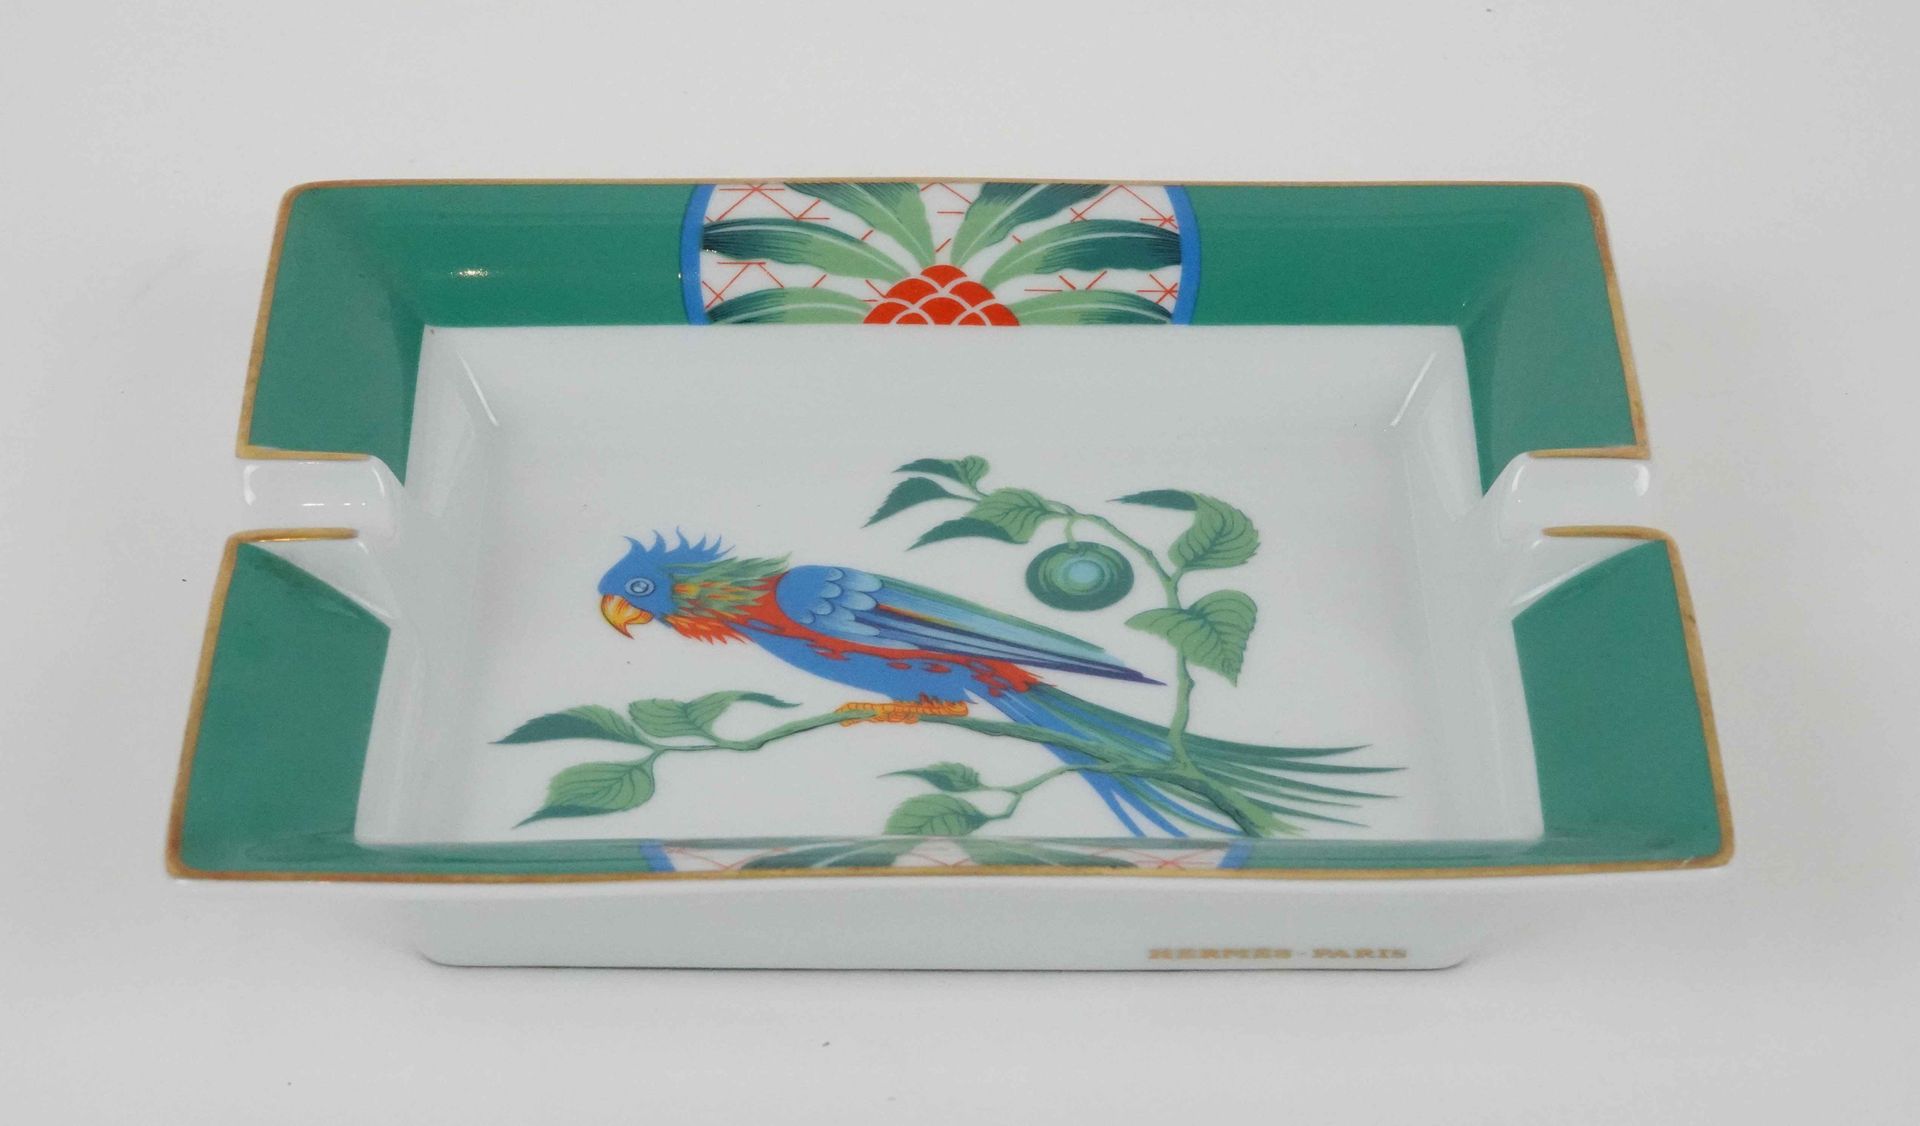 Null 巴黎爱马仕 法国制造

瓷质搪瓷烟灰缸，有臀部的鹦鹉设计

长：20 x 宽：16 cm